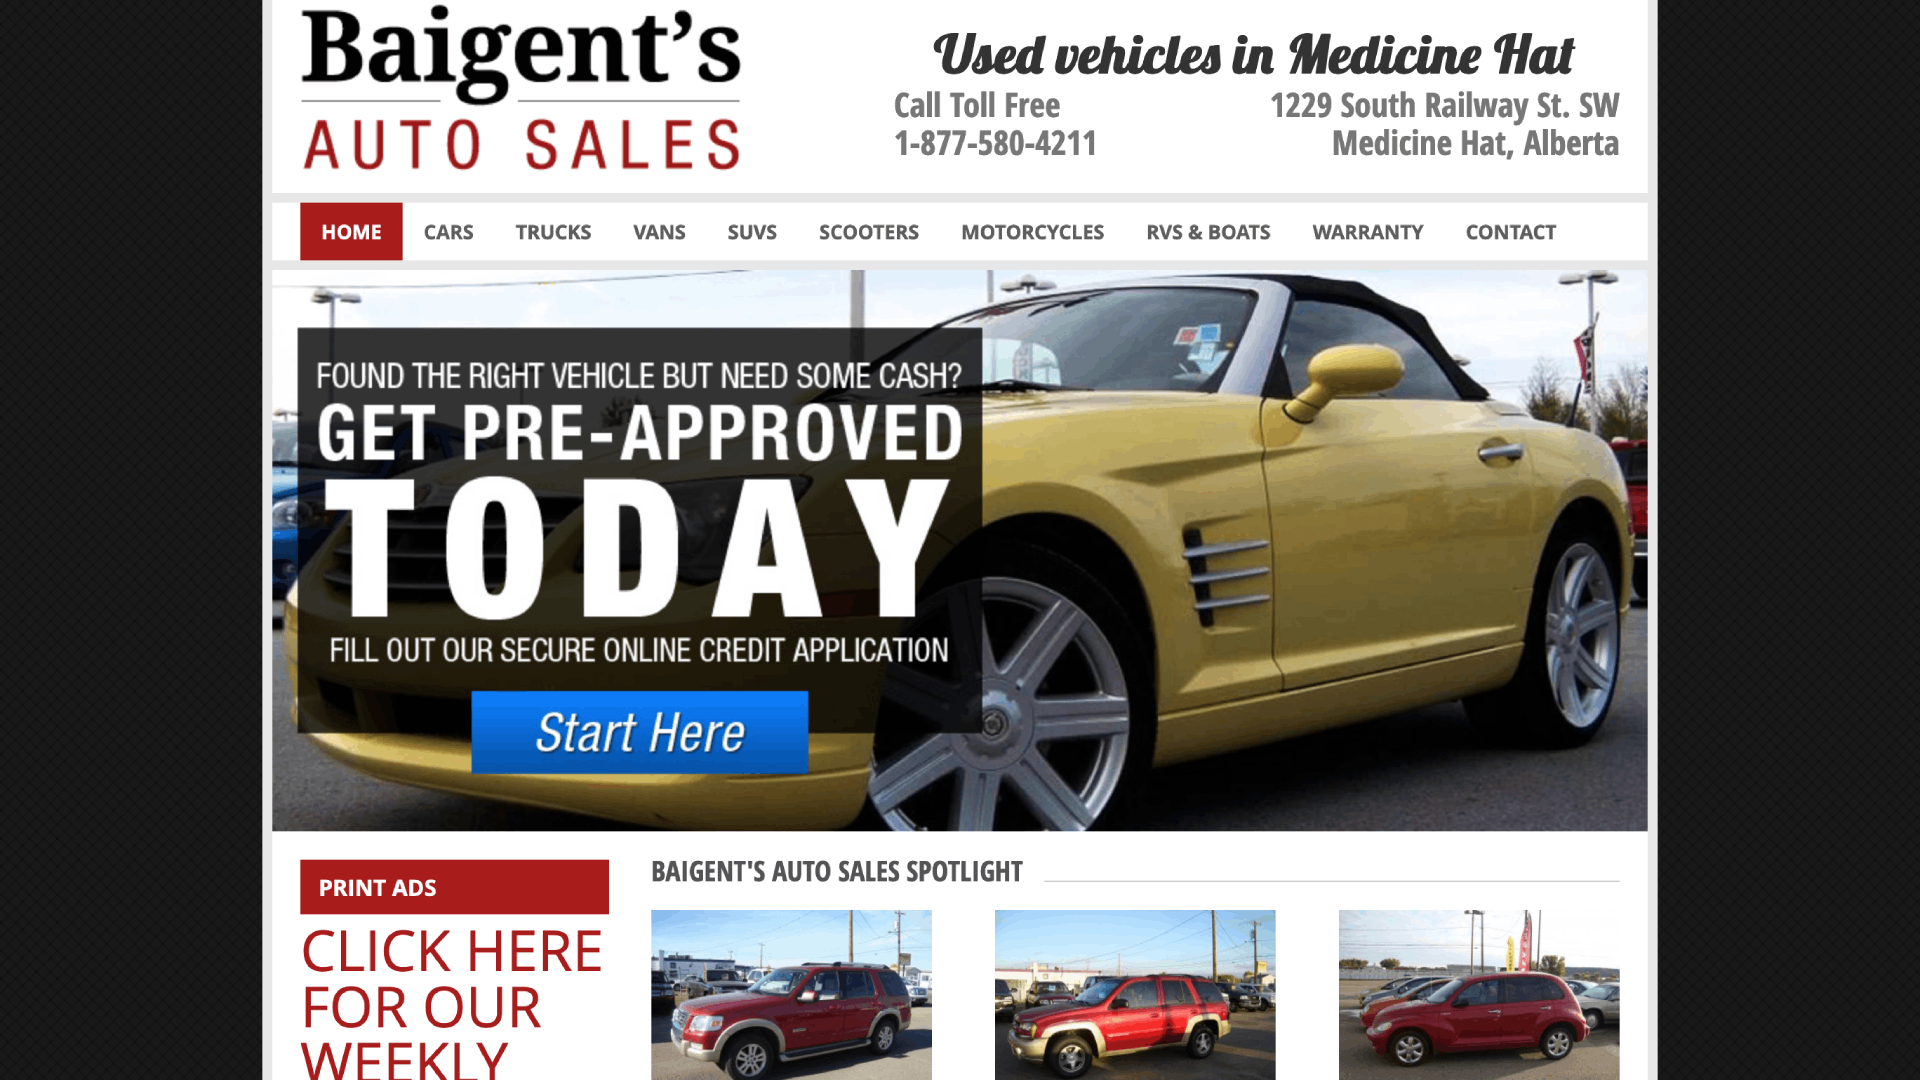 Baigent's Auto Sales website